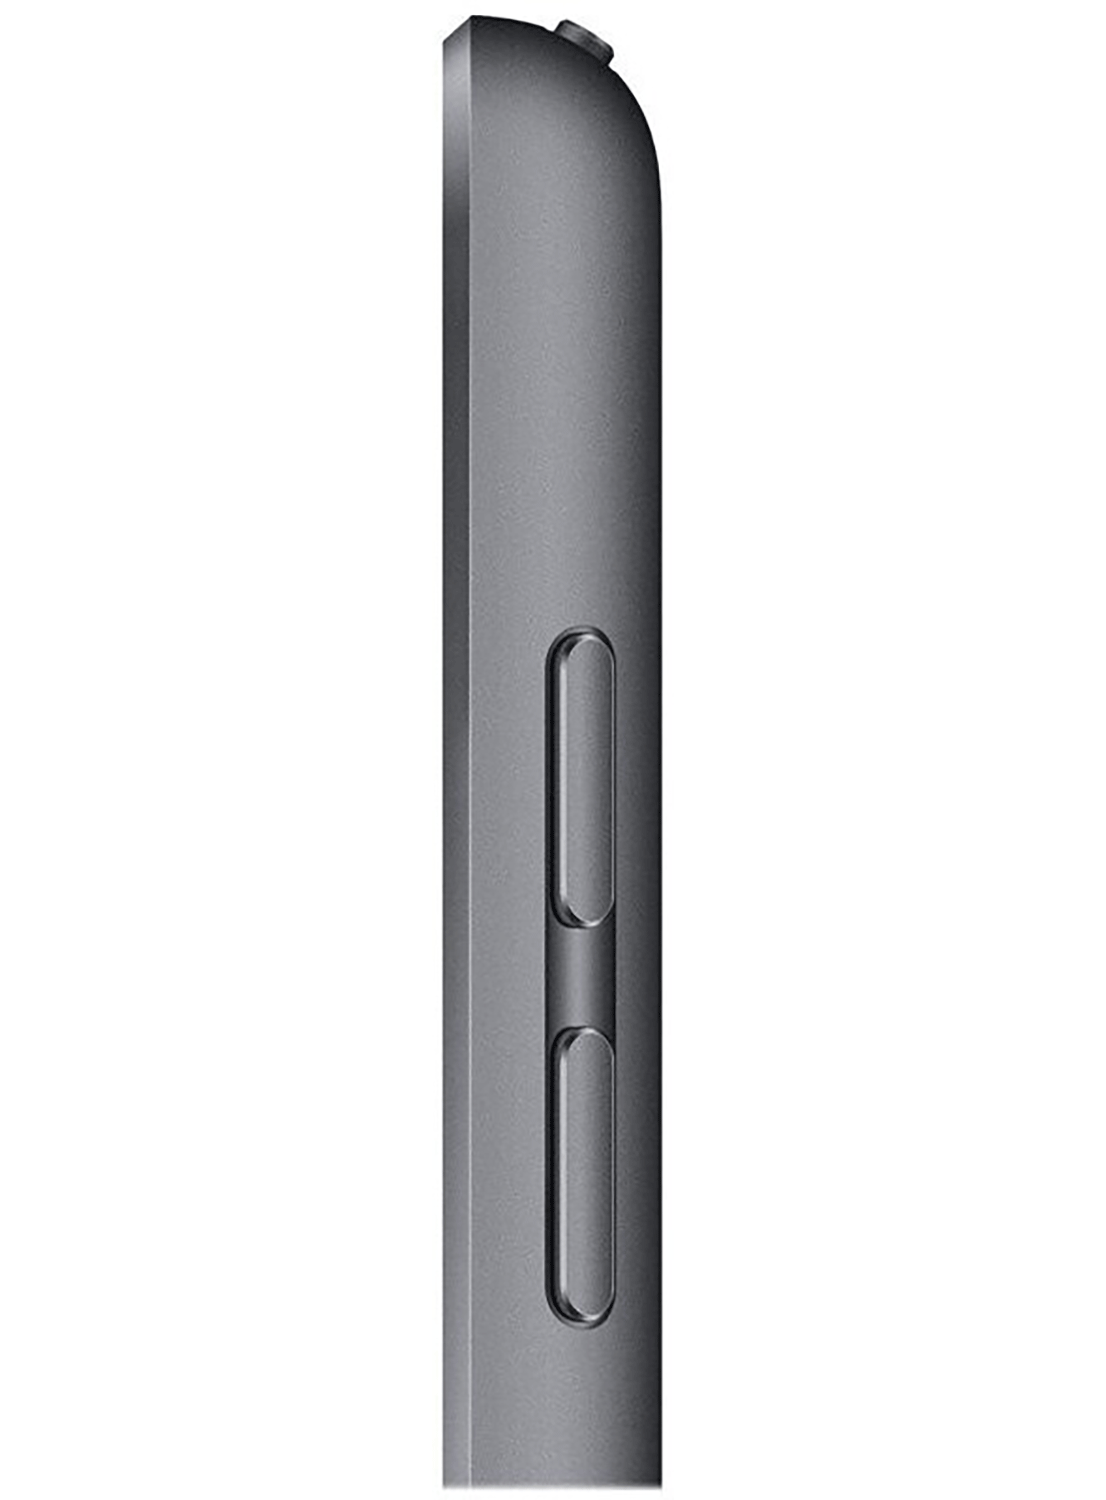 Apple iPad 8.Gen (2020)